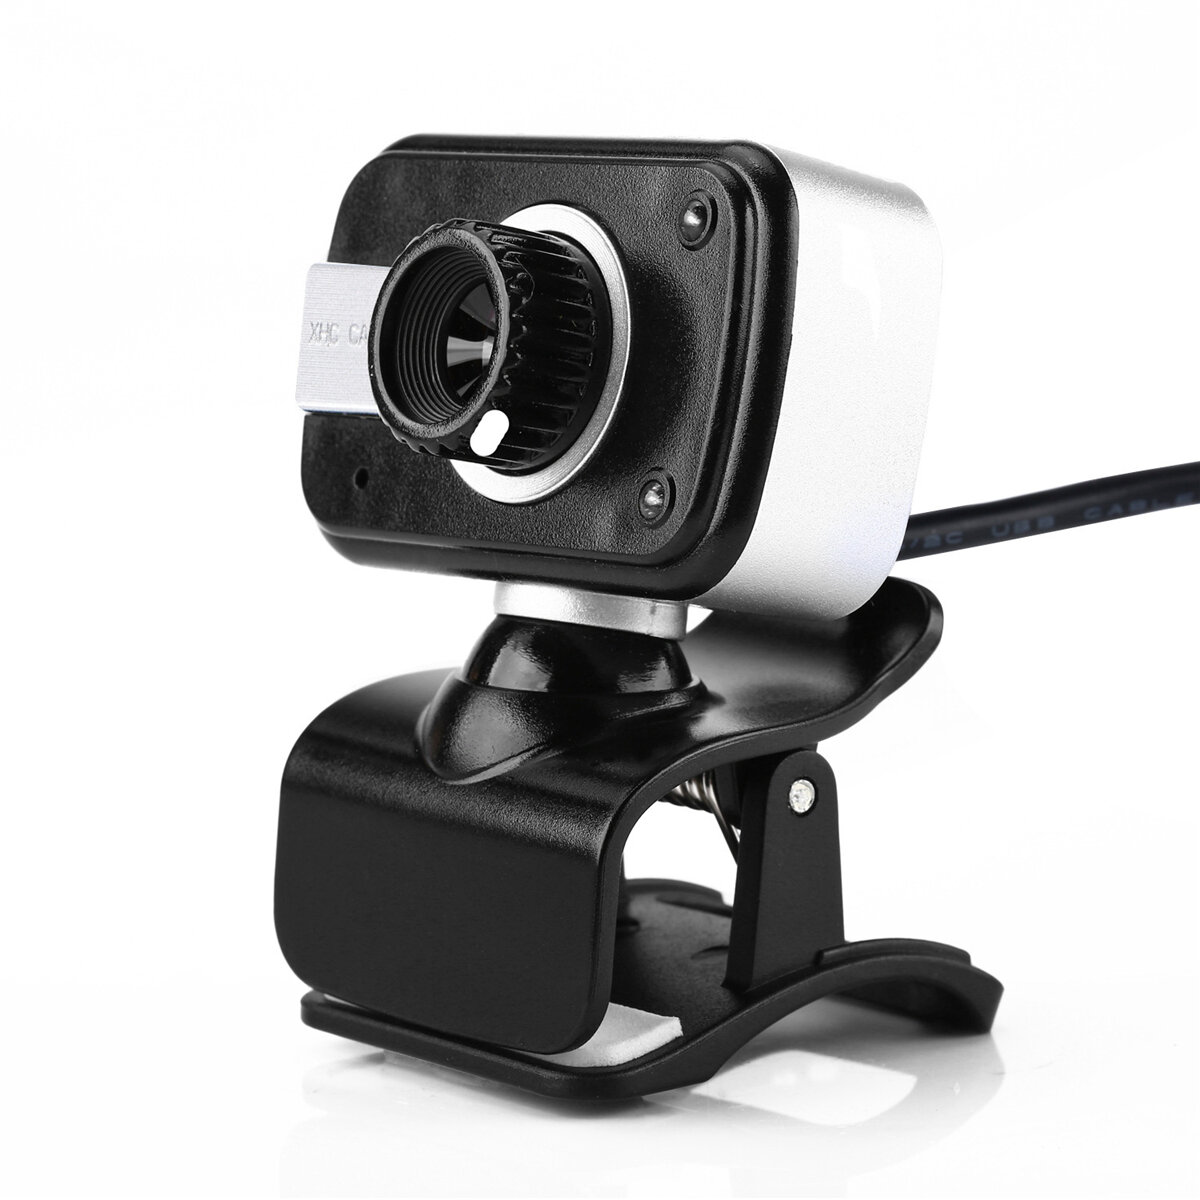 USB 2.0 HD 1080P Webcam Web Camera Computer HD Built-in Microphone USB Plug and Play